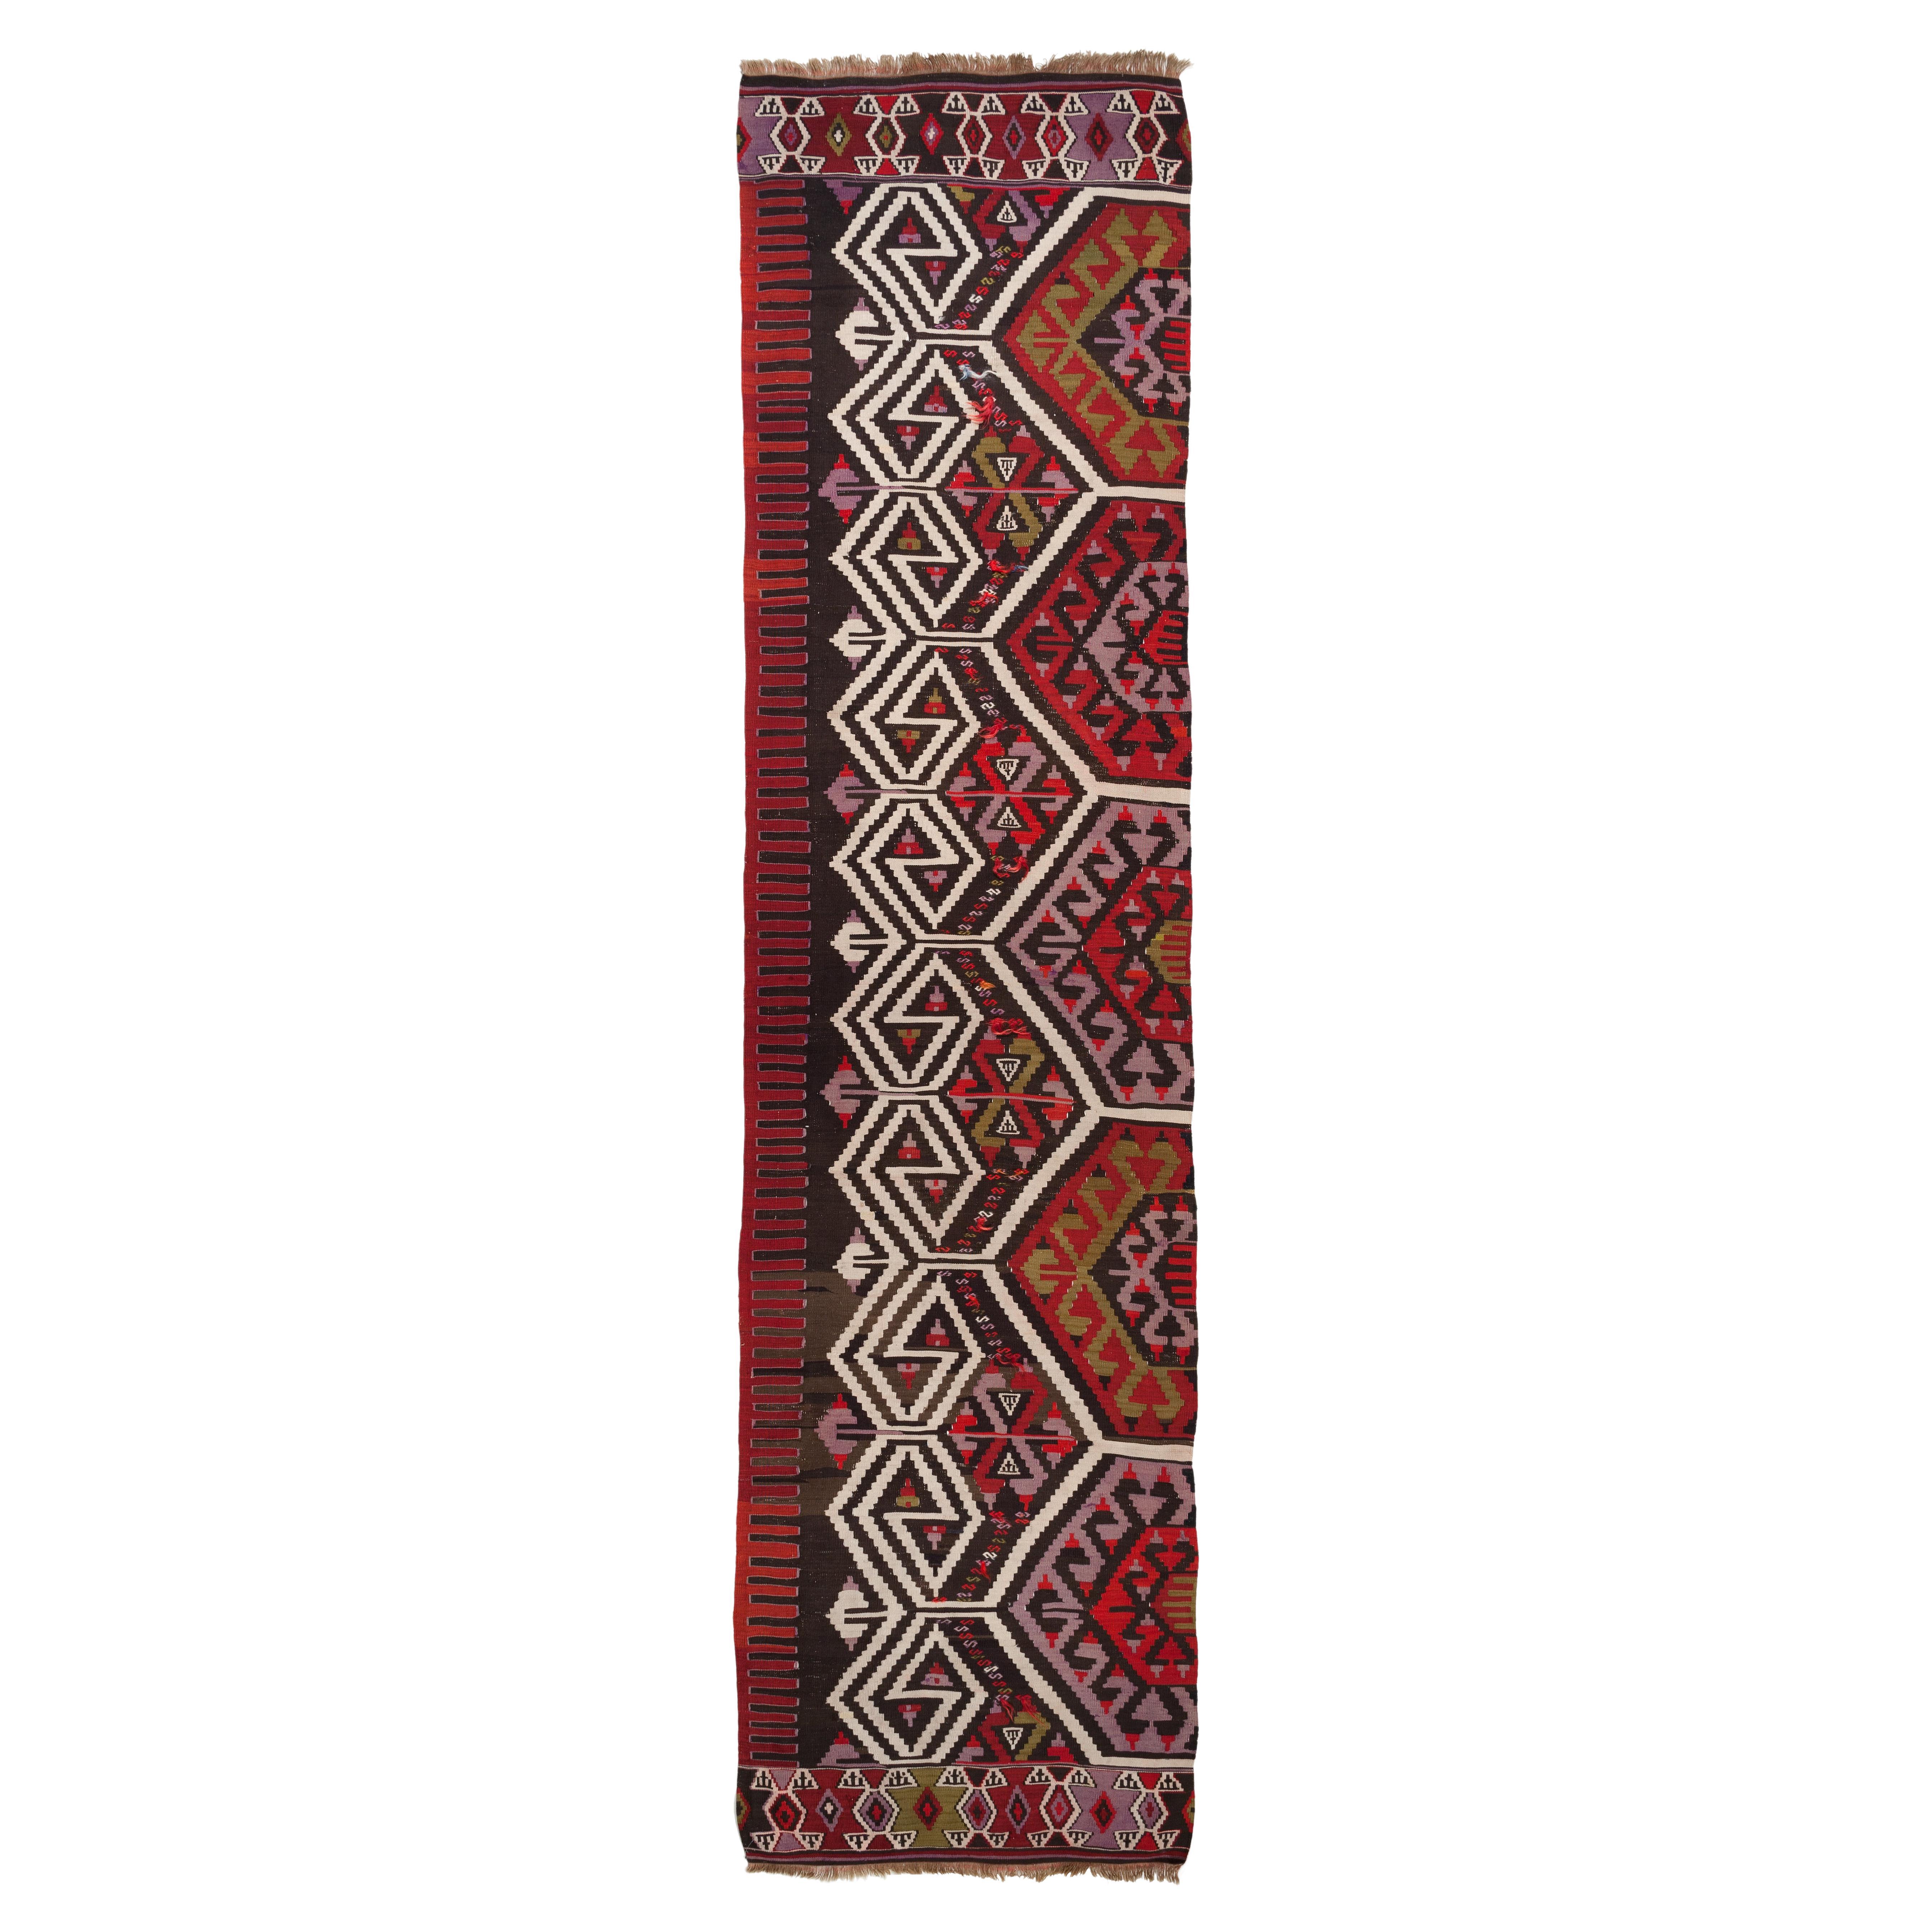 Ararat-Teppiche Kollektion, antiker Konya-Kelim-Teppich aus Zentralasien